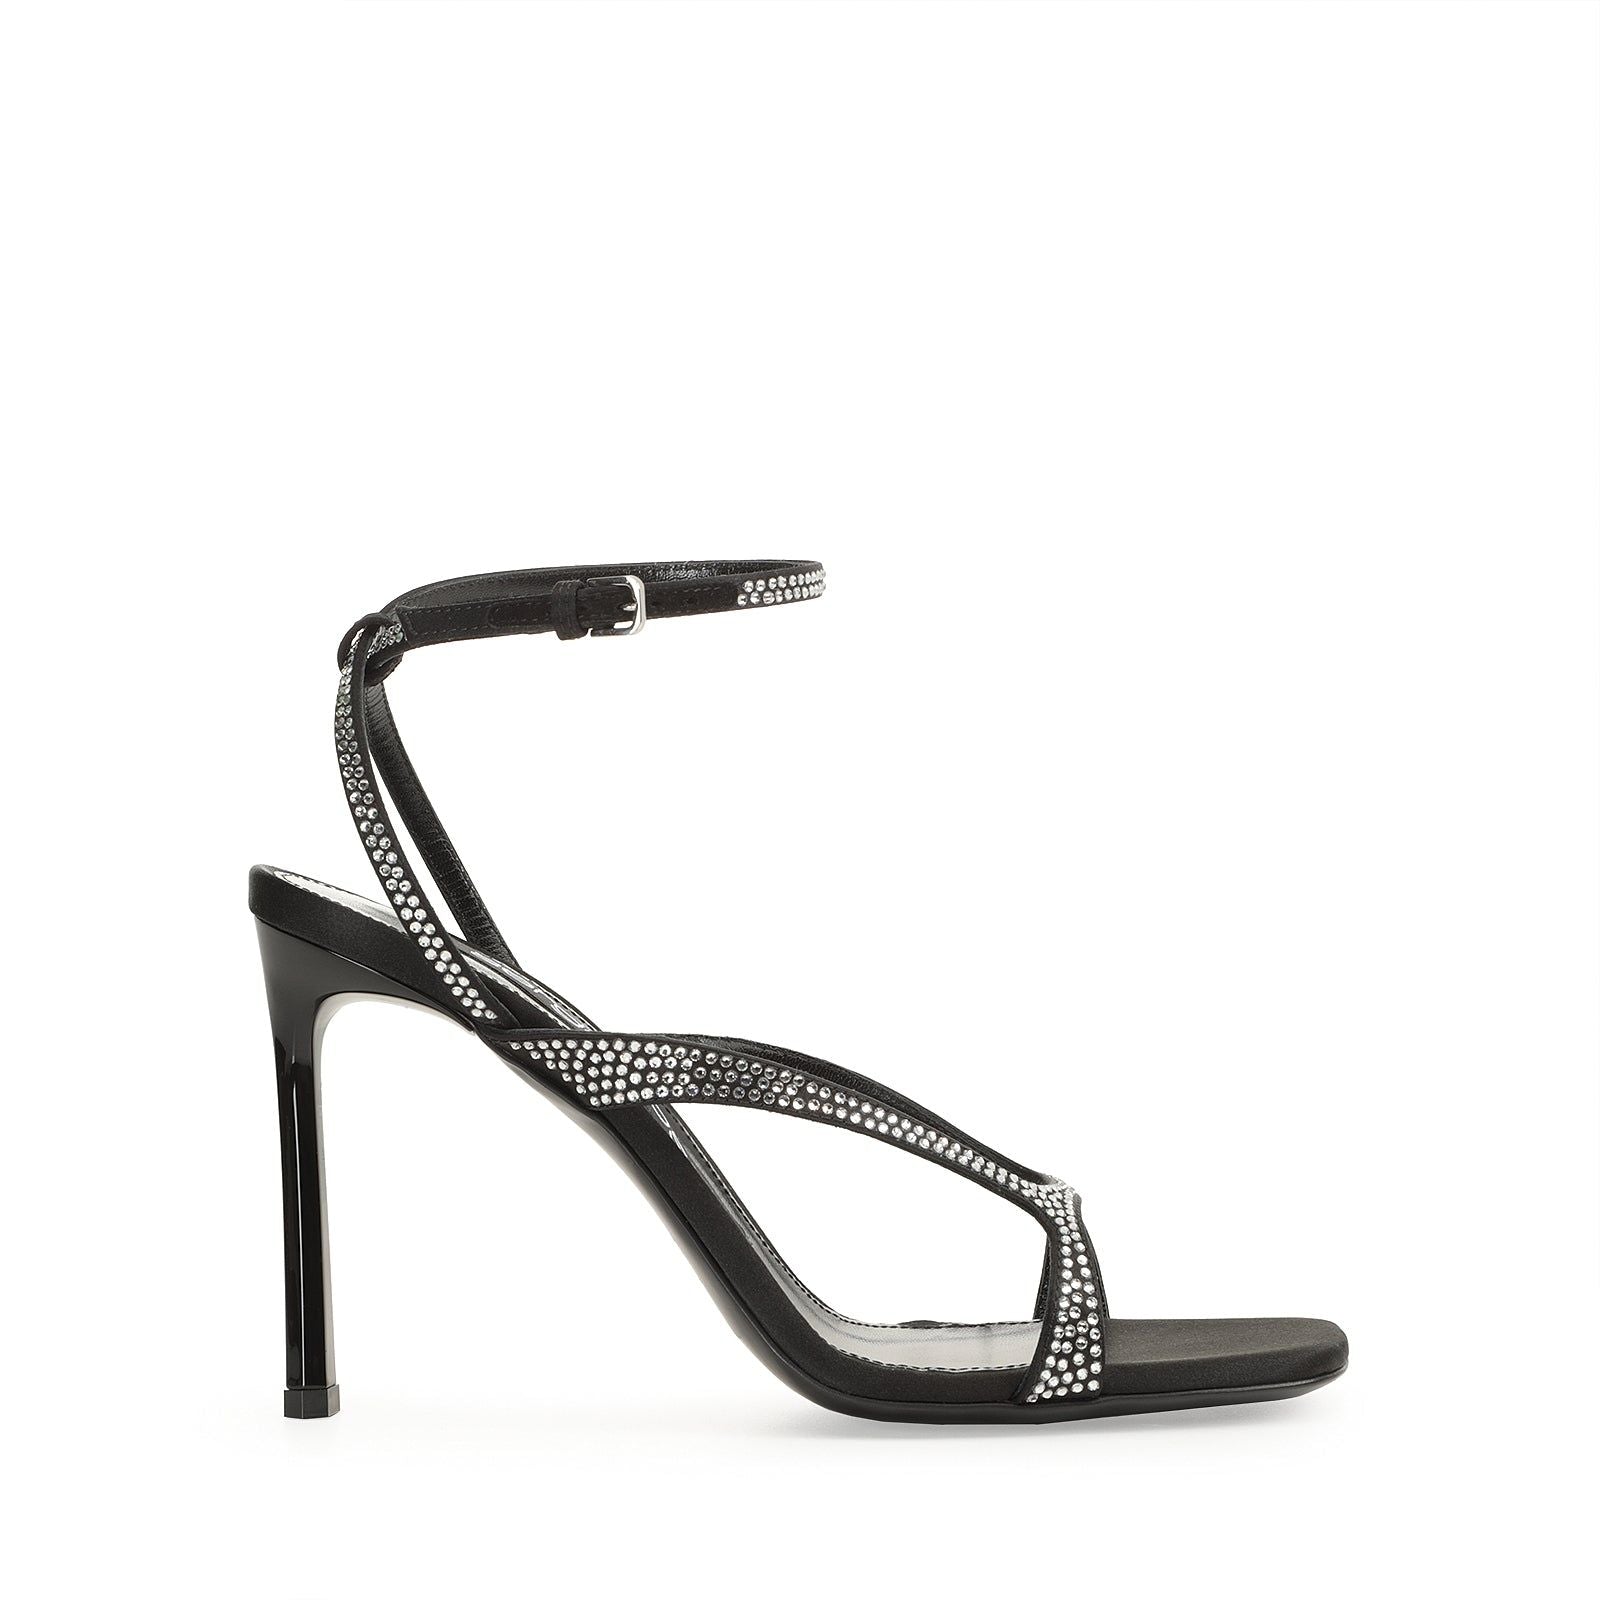 Sr Aracne 95 heeled sandals - Nero & Crystal